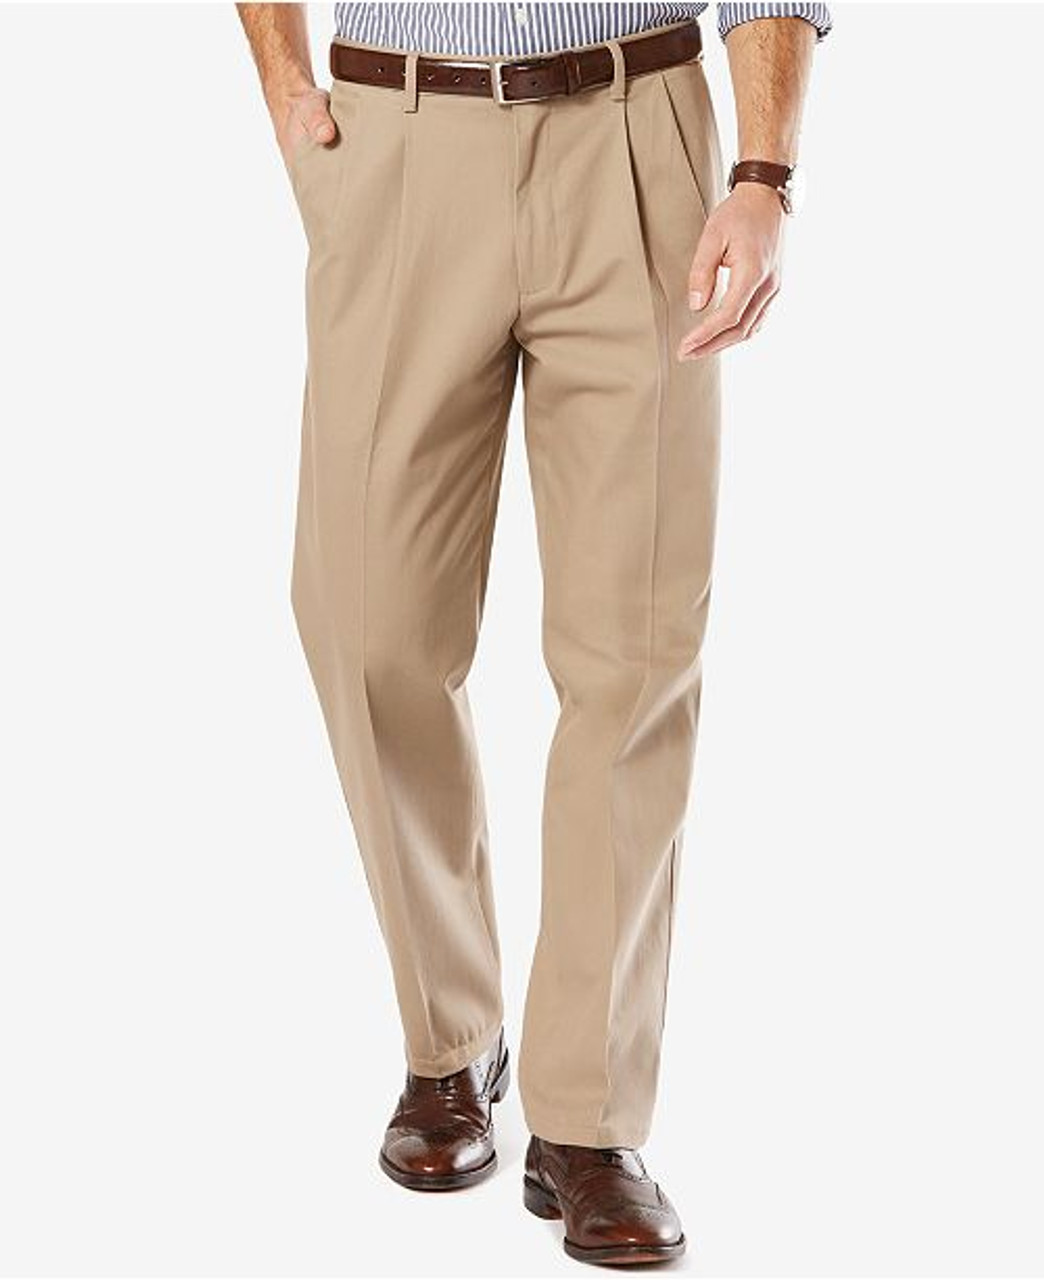 28677-0001 Dockers Signature Khaki Pleated Pant Big & Tall Sizes